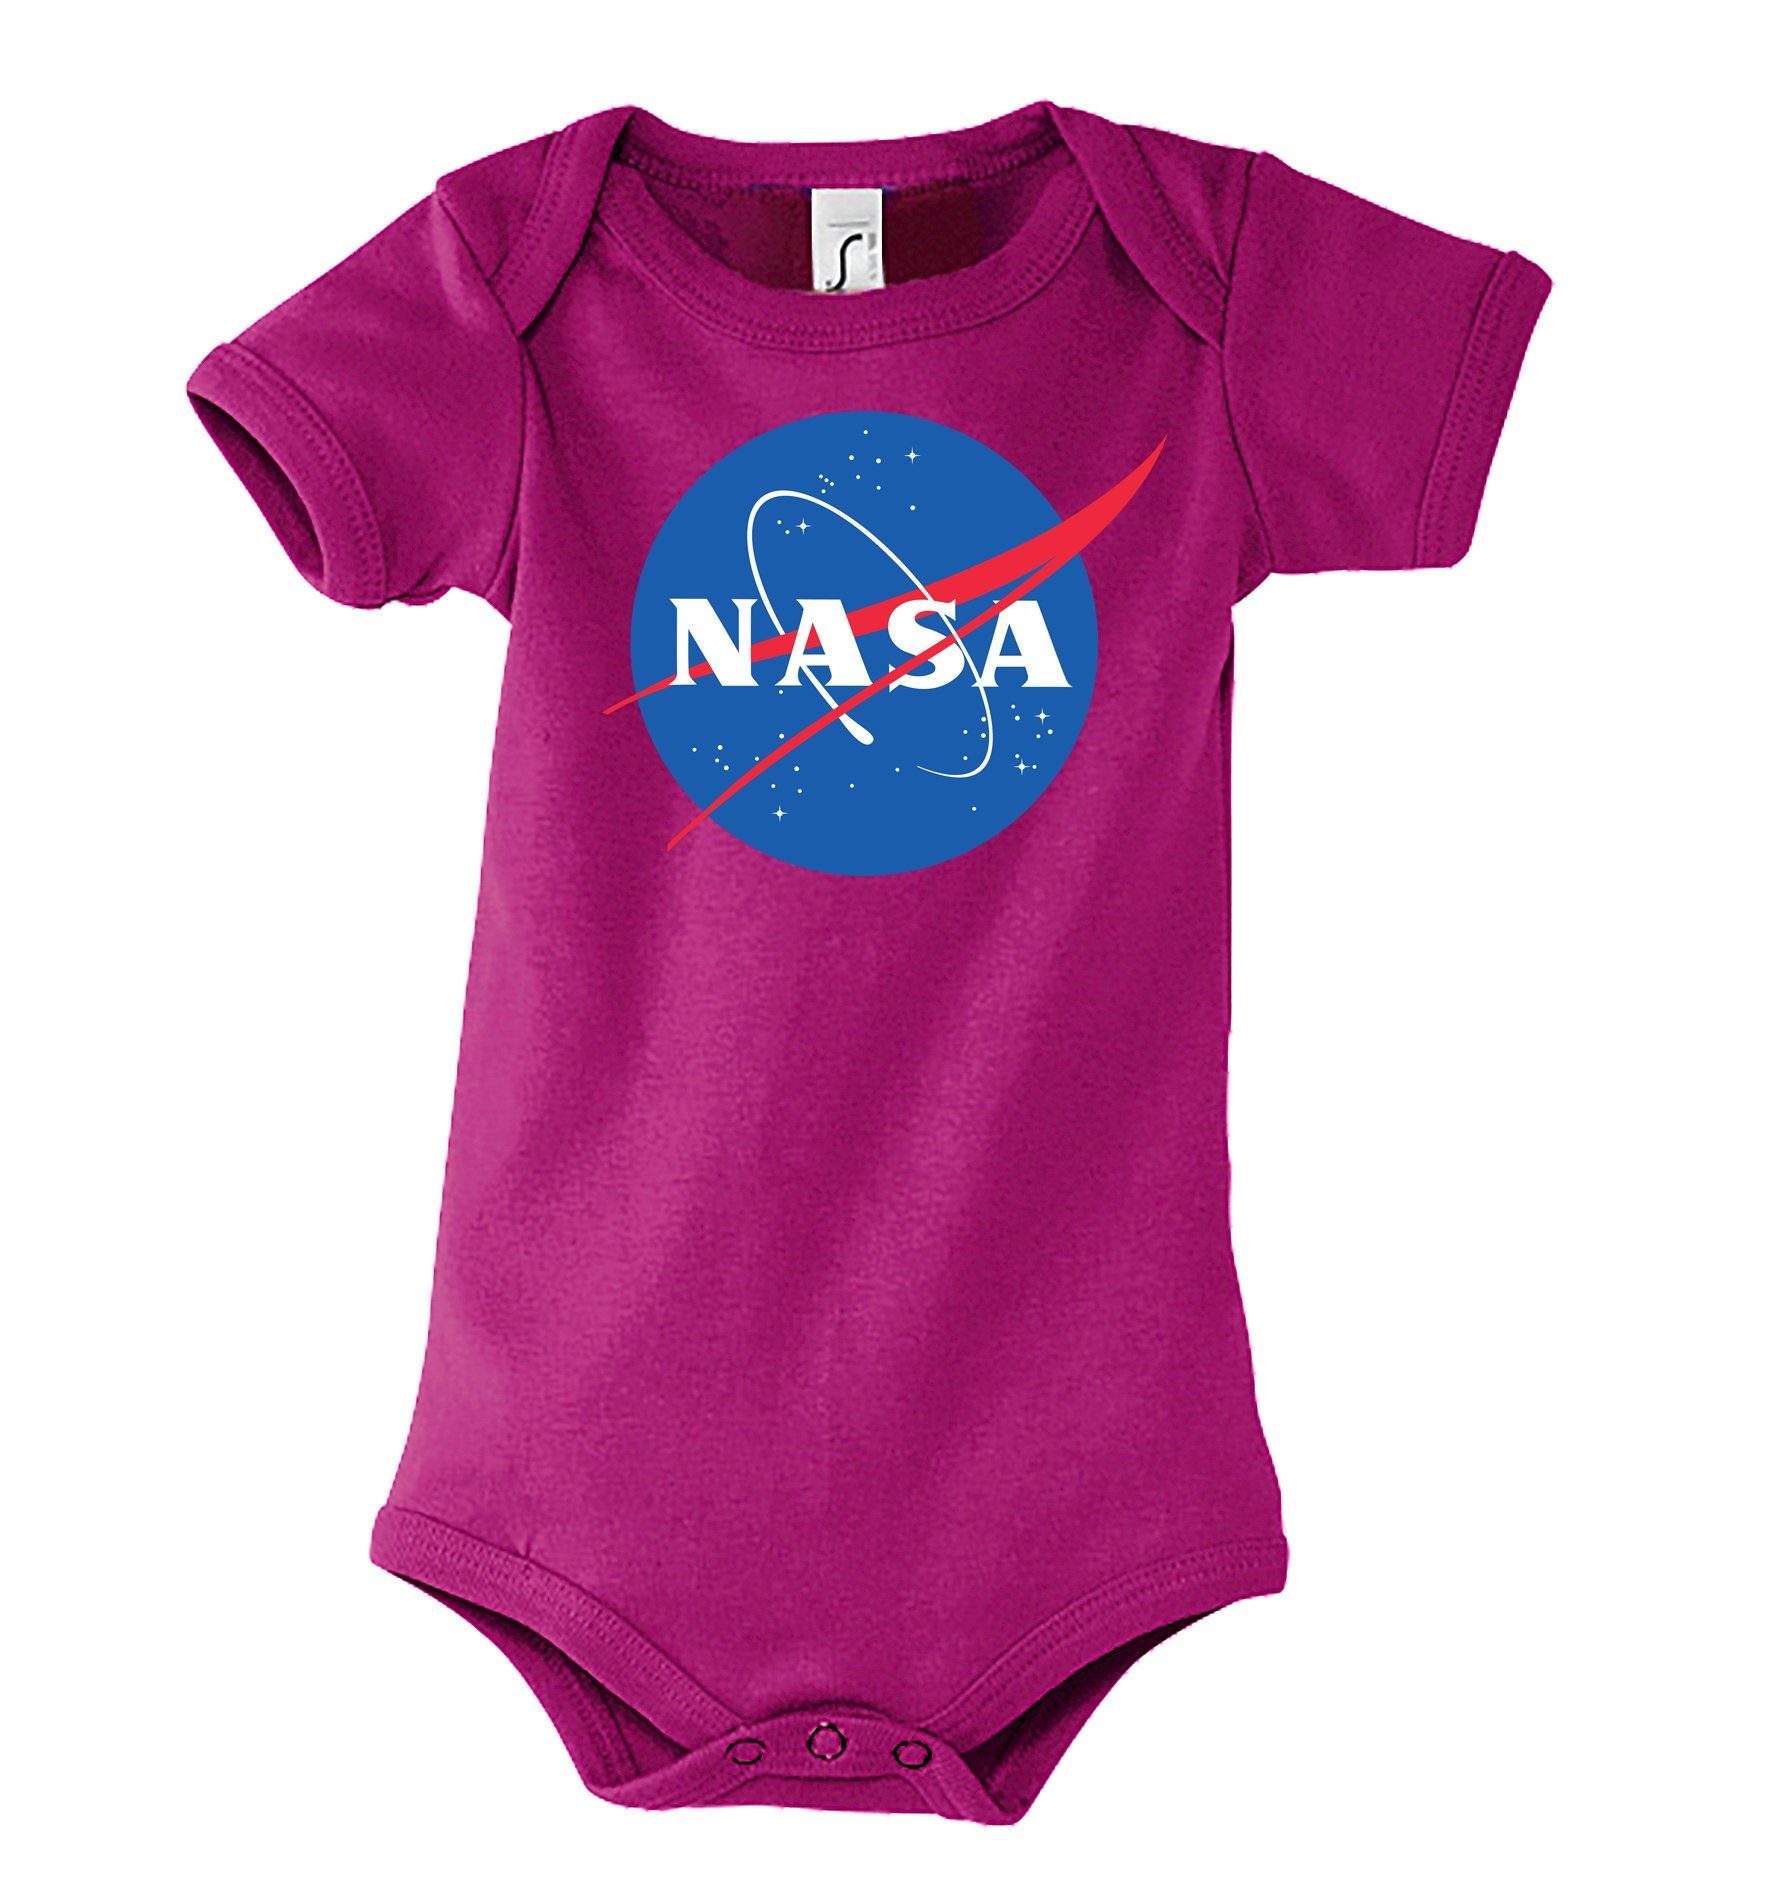 Youth Designz Kurzarmbody Baby Body Strampler NASA mit niedlichem Frontprint Fuchsia